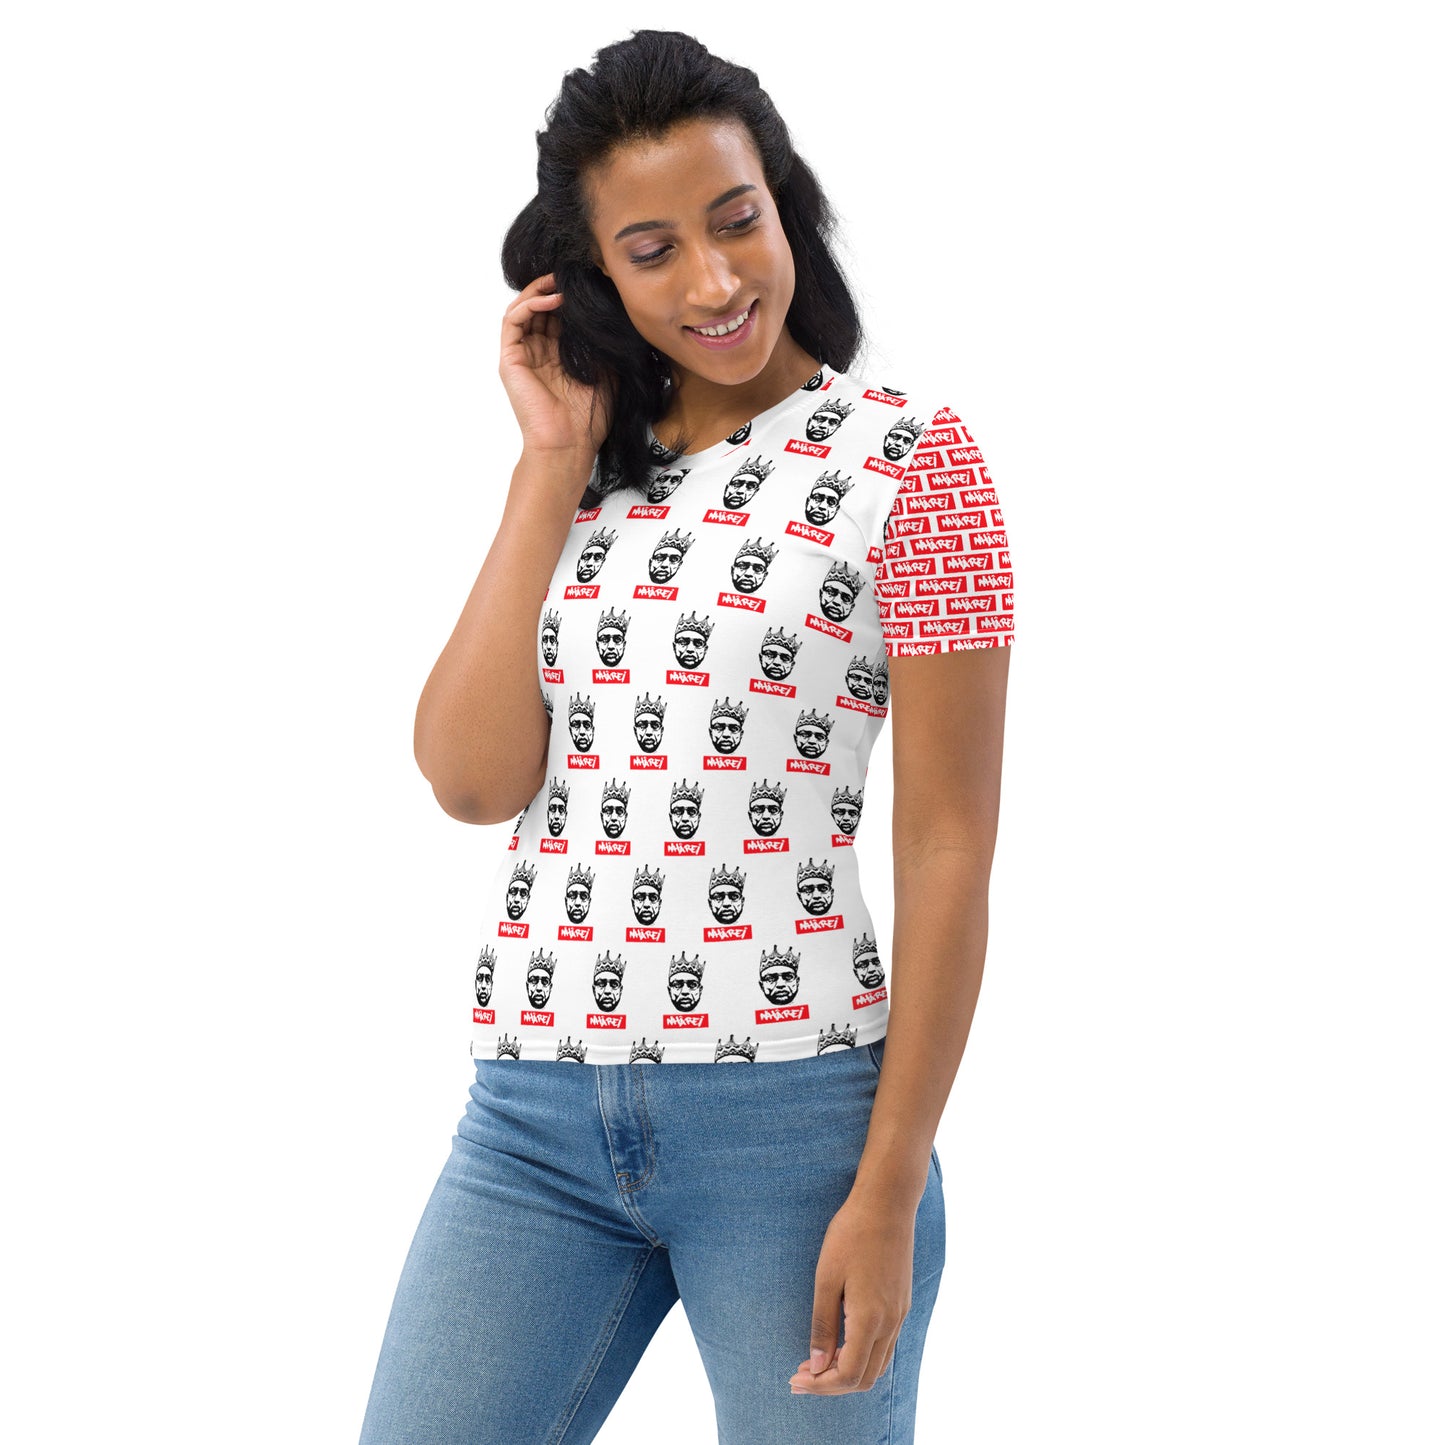 Amilcar Cabral NR Women's T-shirt